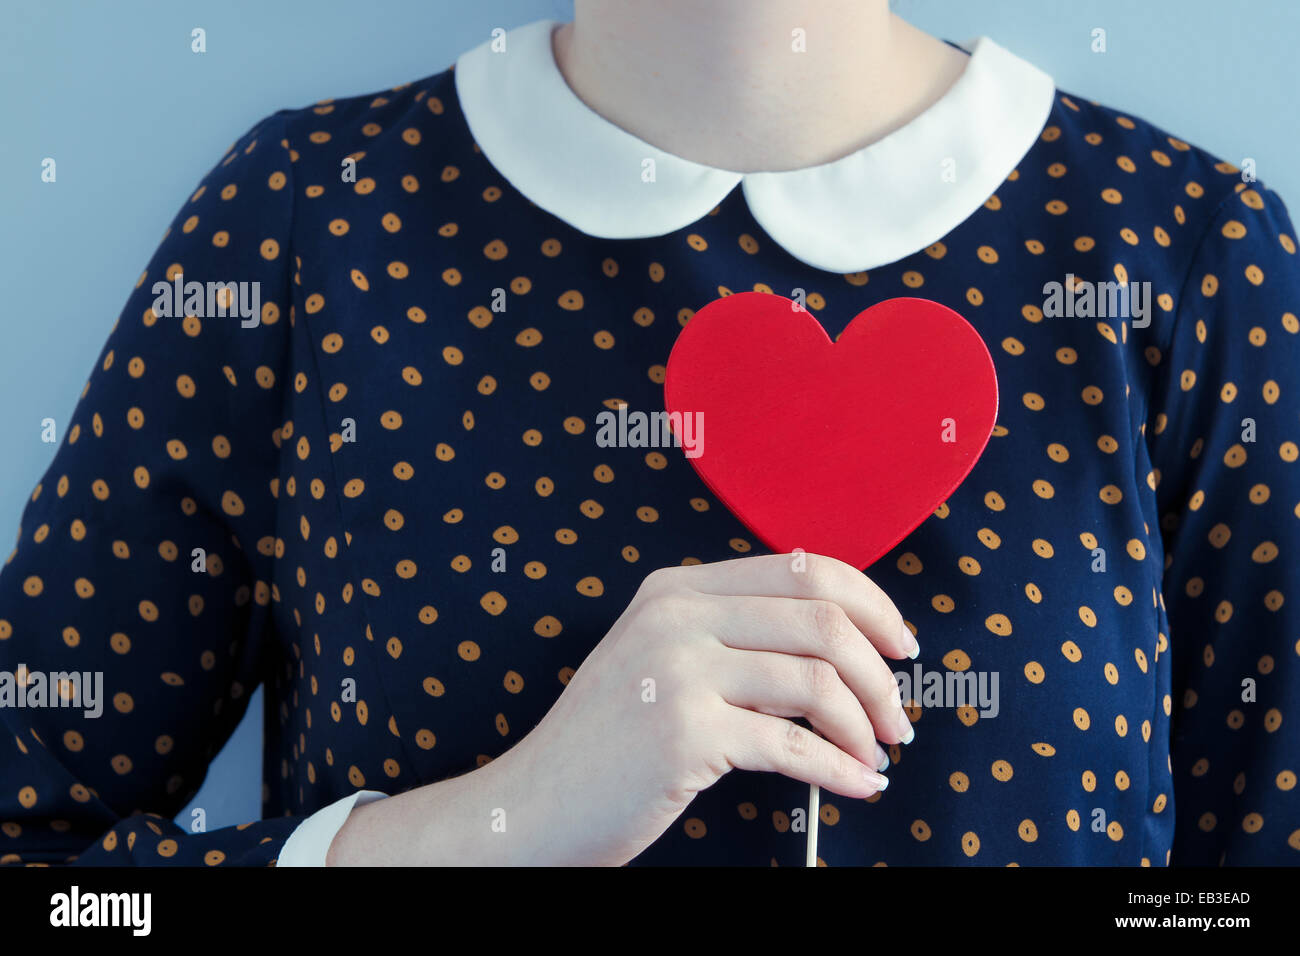 Woman wearing polka dot dress holding heart shape object Stock Photo